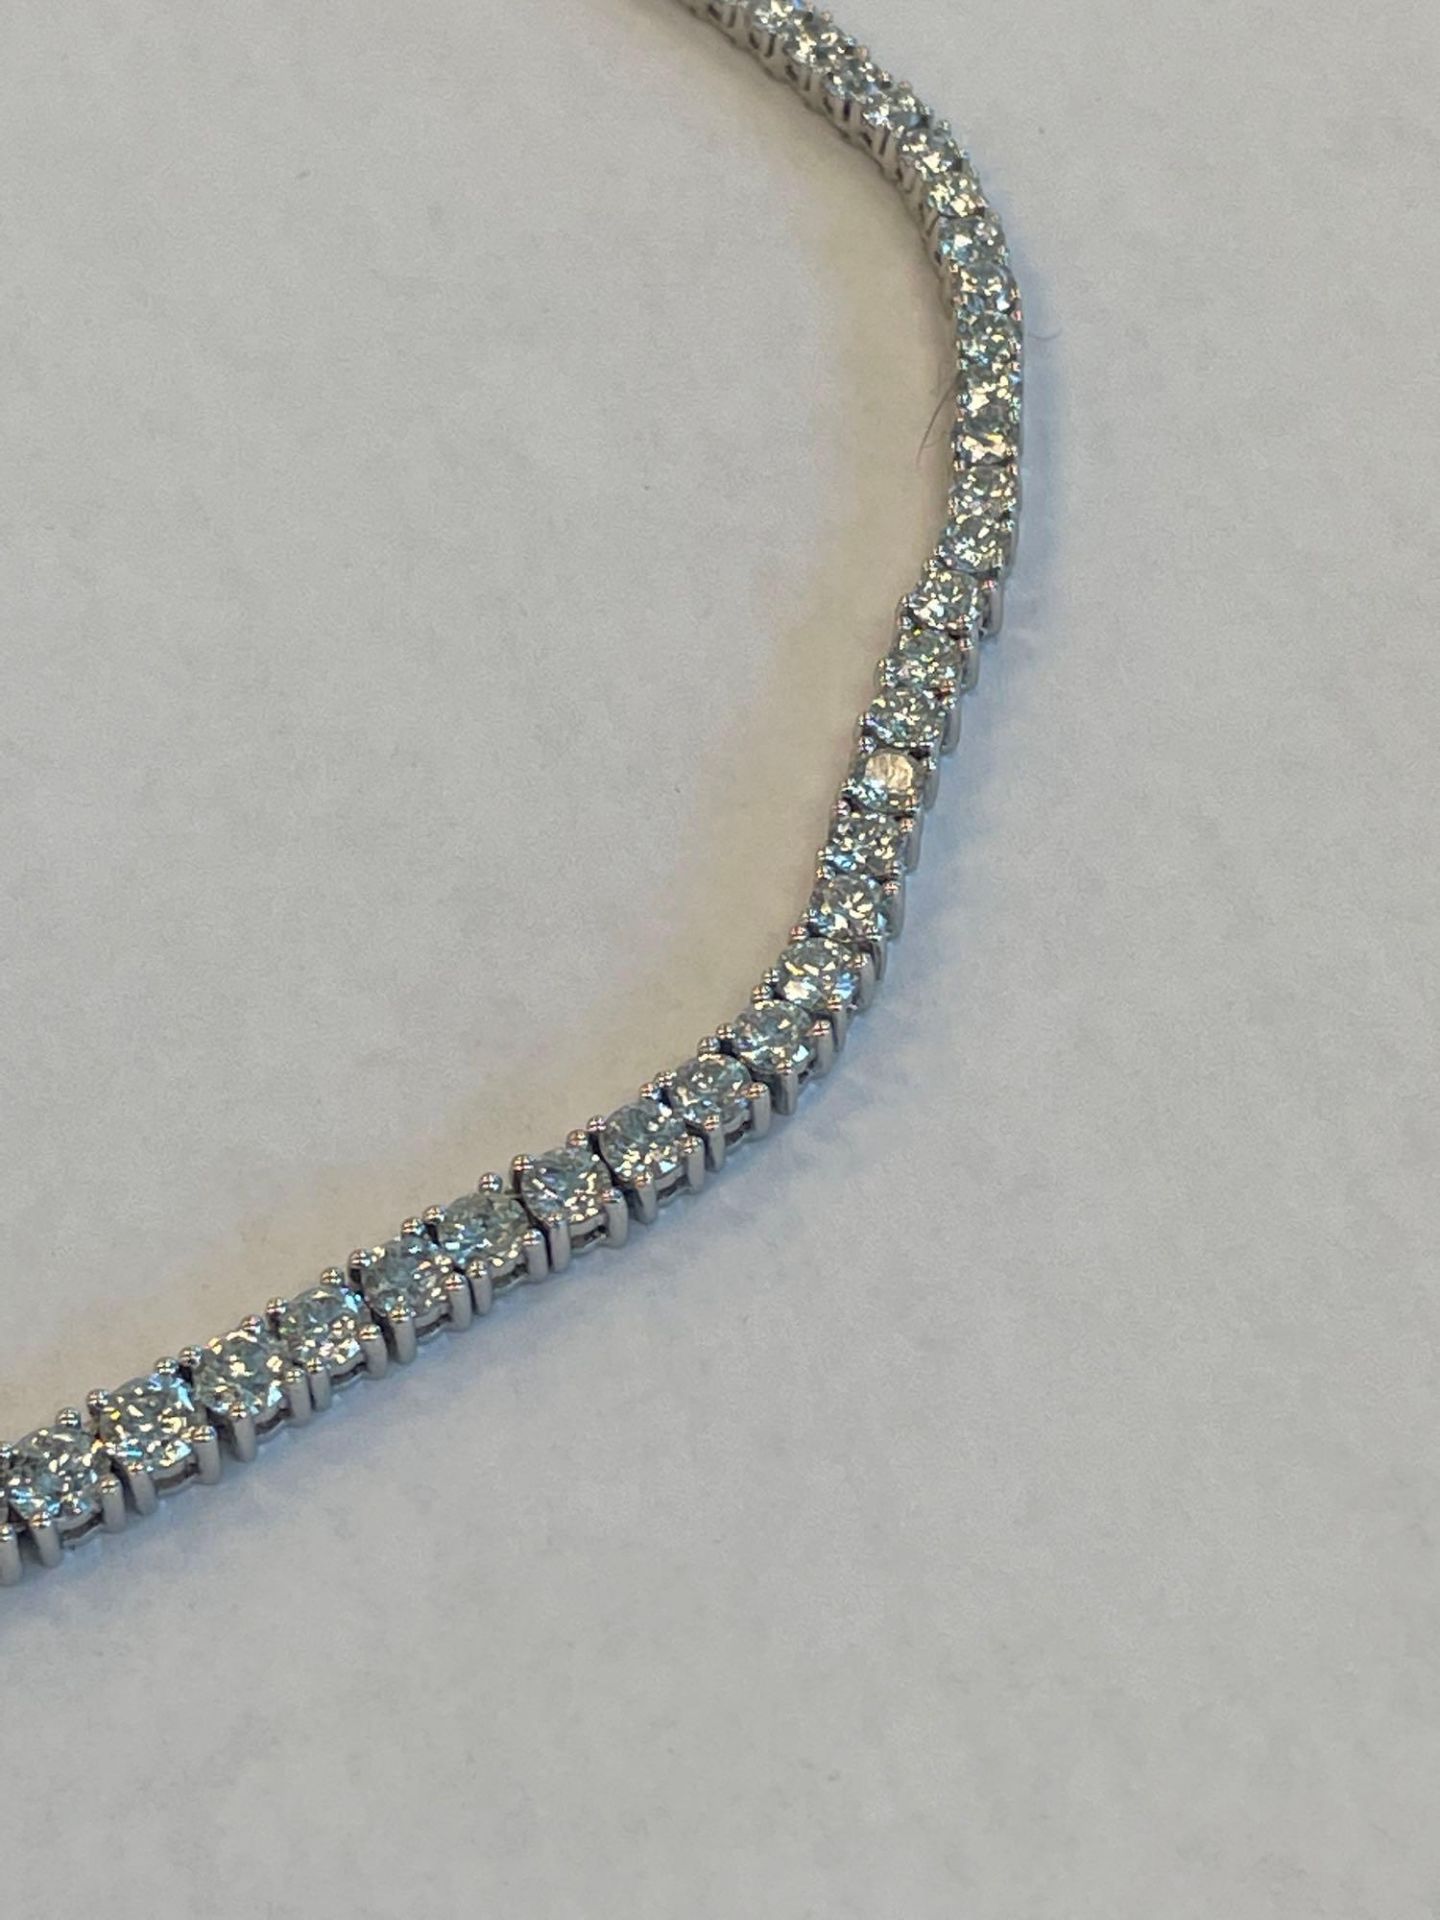 18KT Diamond Necklace 19.79 cts diamond - Image 5 of 7